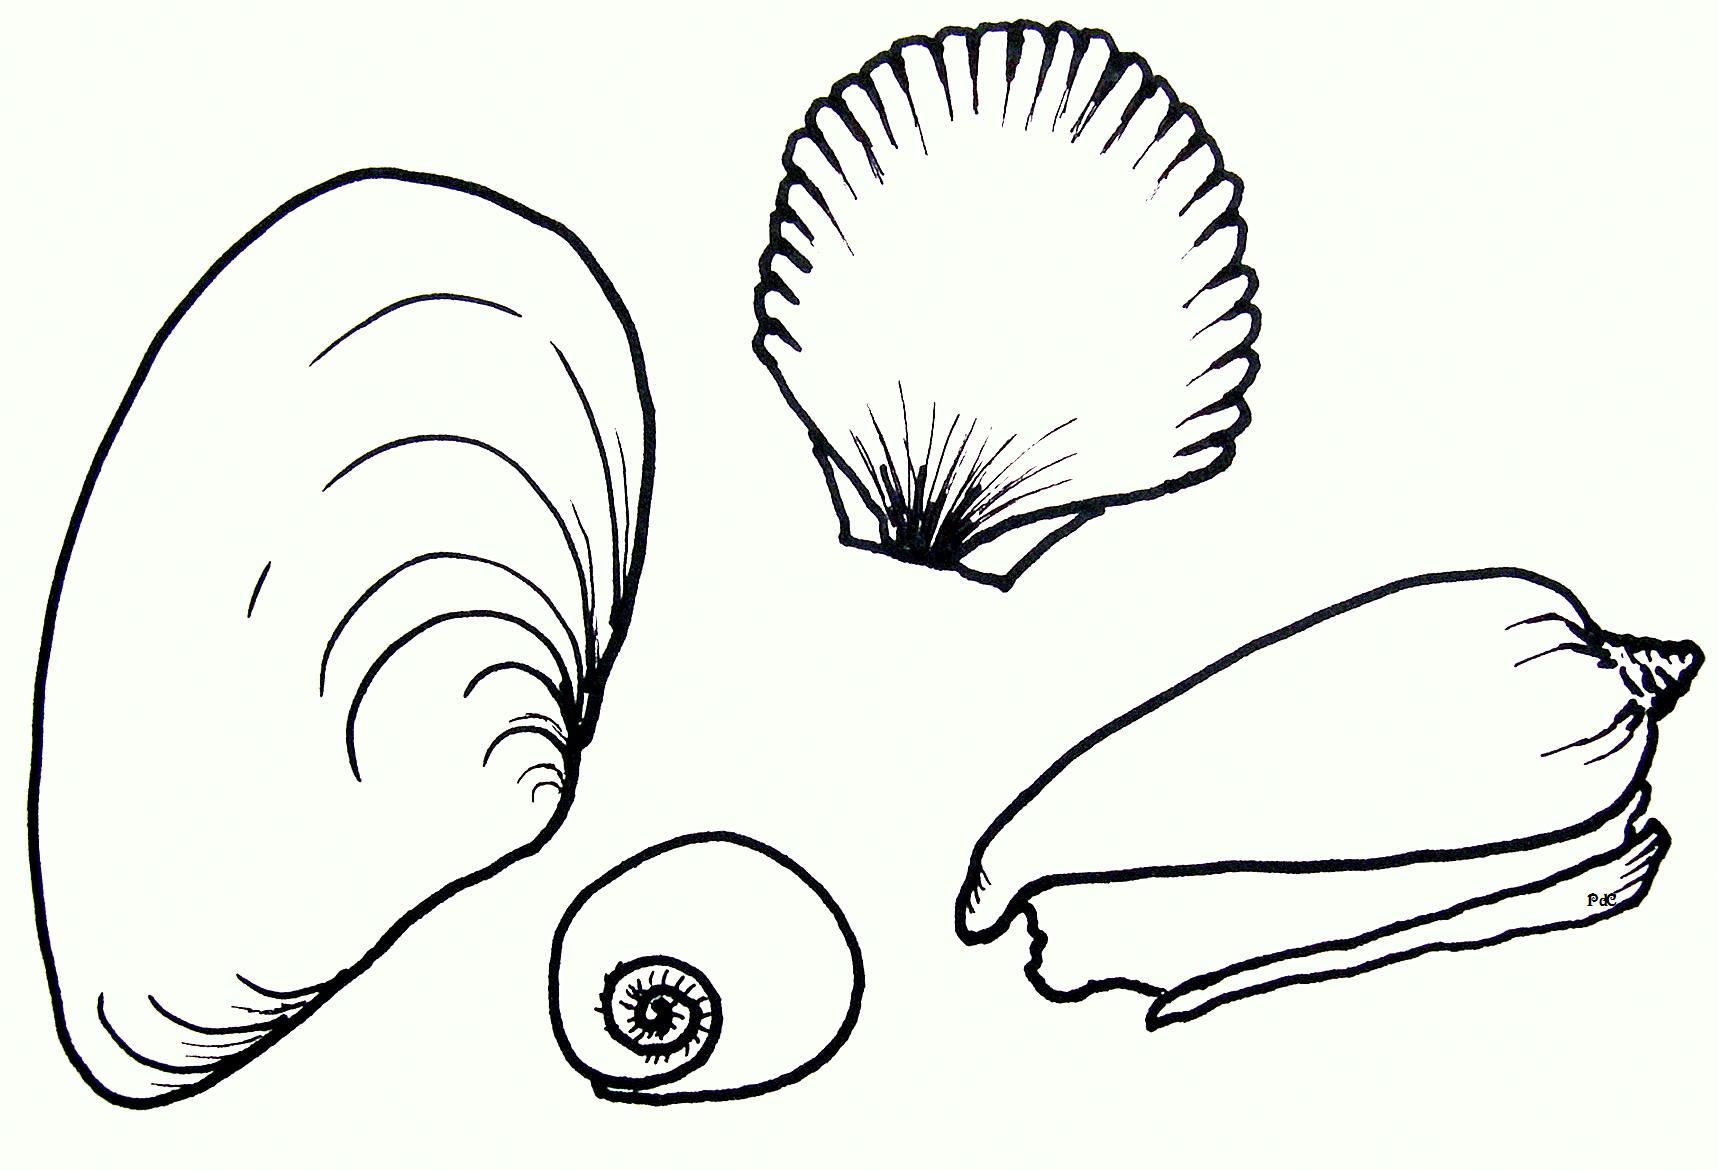 Seashells by millhillartwork